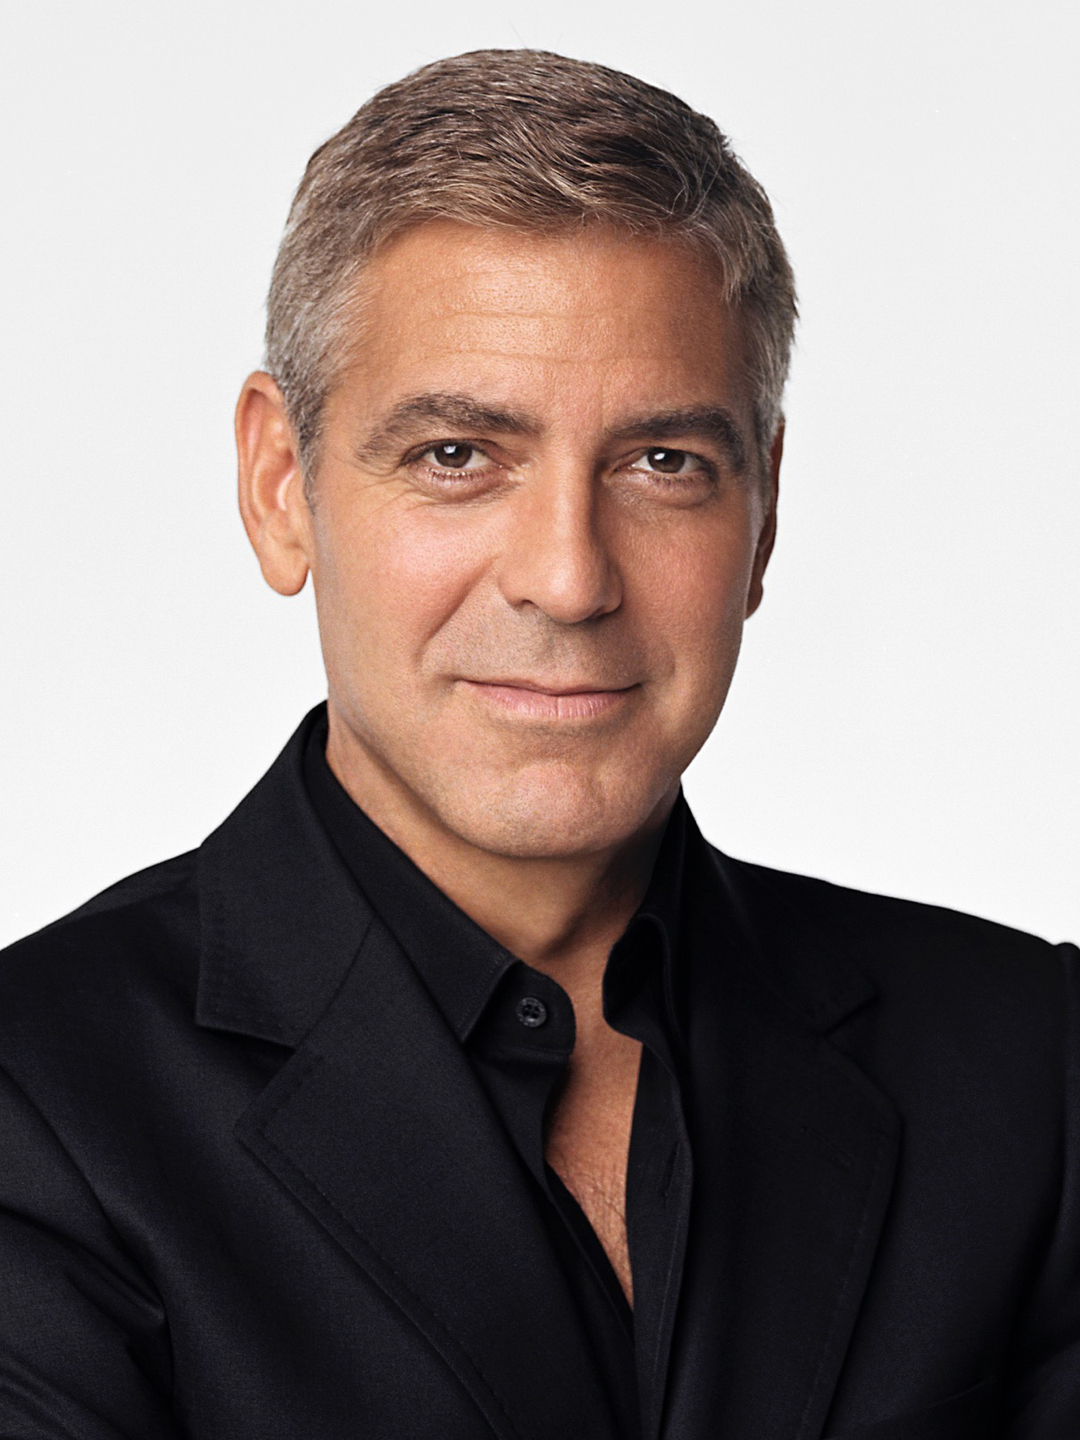 George Clooney background